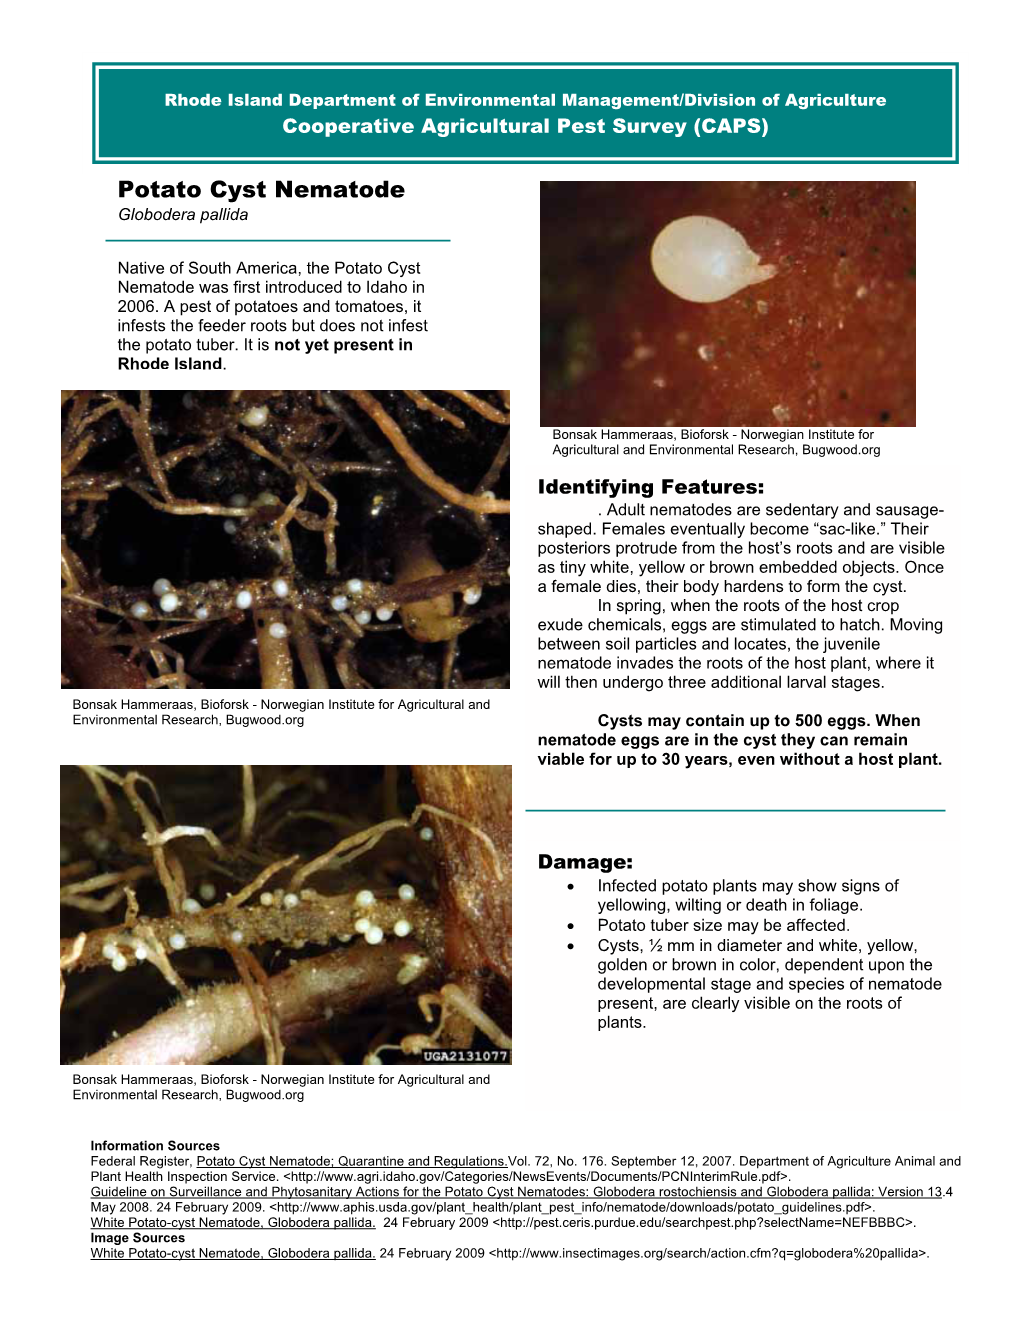 RI DEM/Agriculture Potato Cyst Nematode Fact Sheet